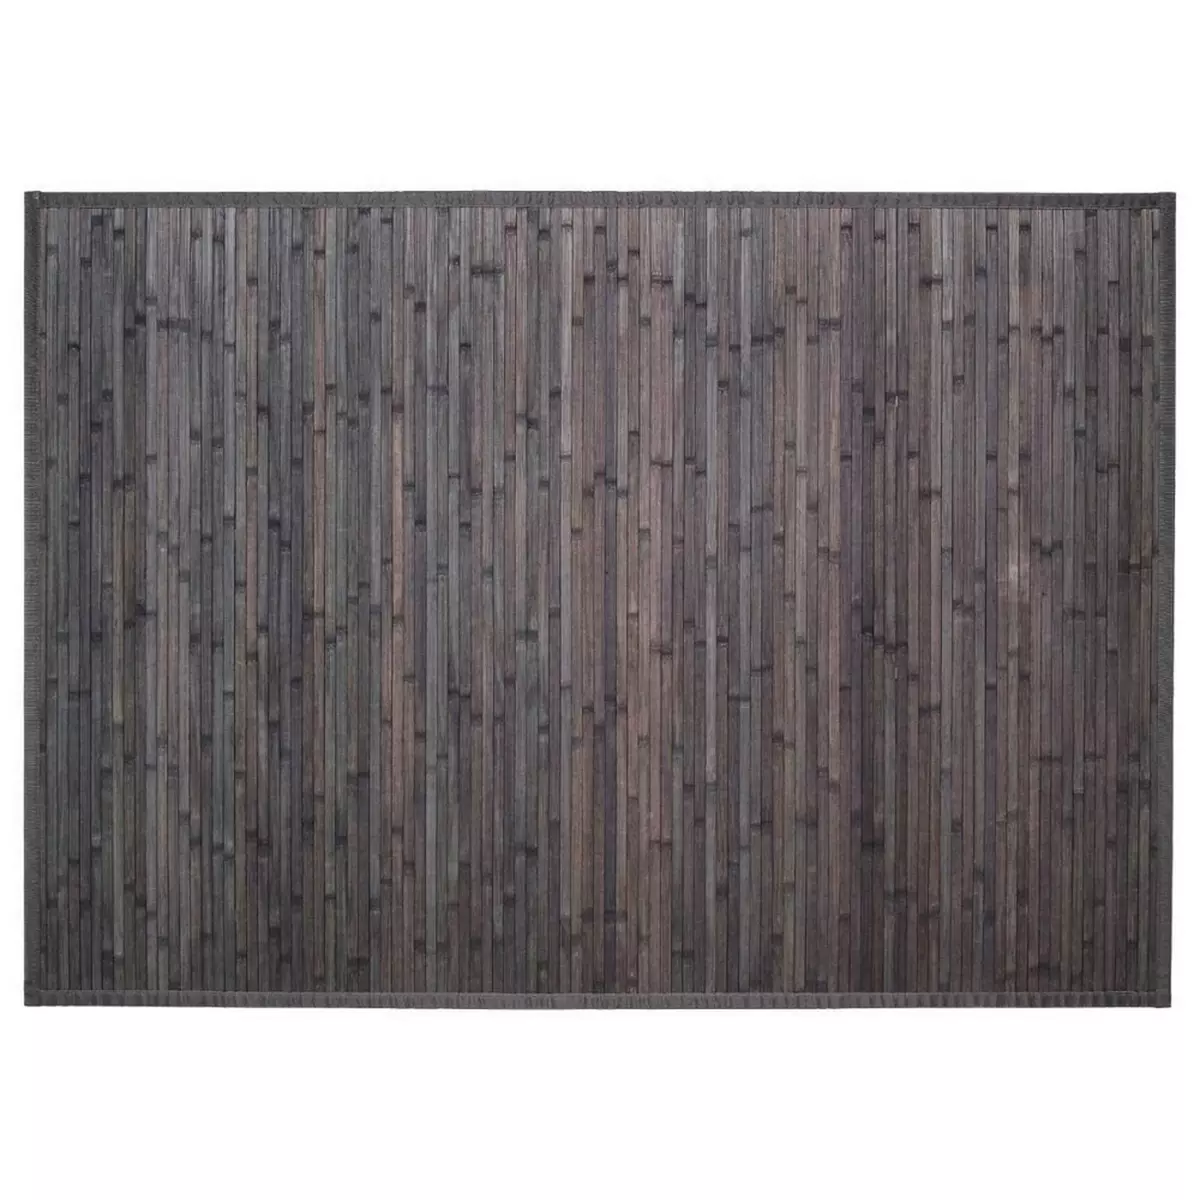  Tapis en bambou 70 x 45 cm Gris Naturel rectangle antiderapant Salle de bain